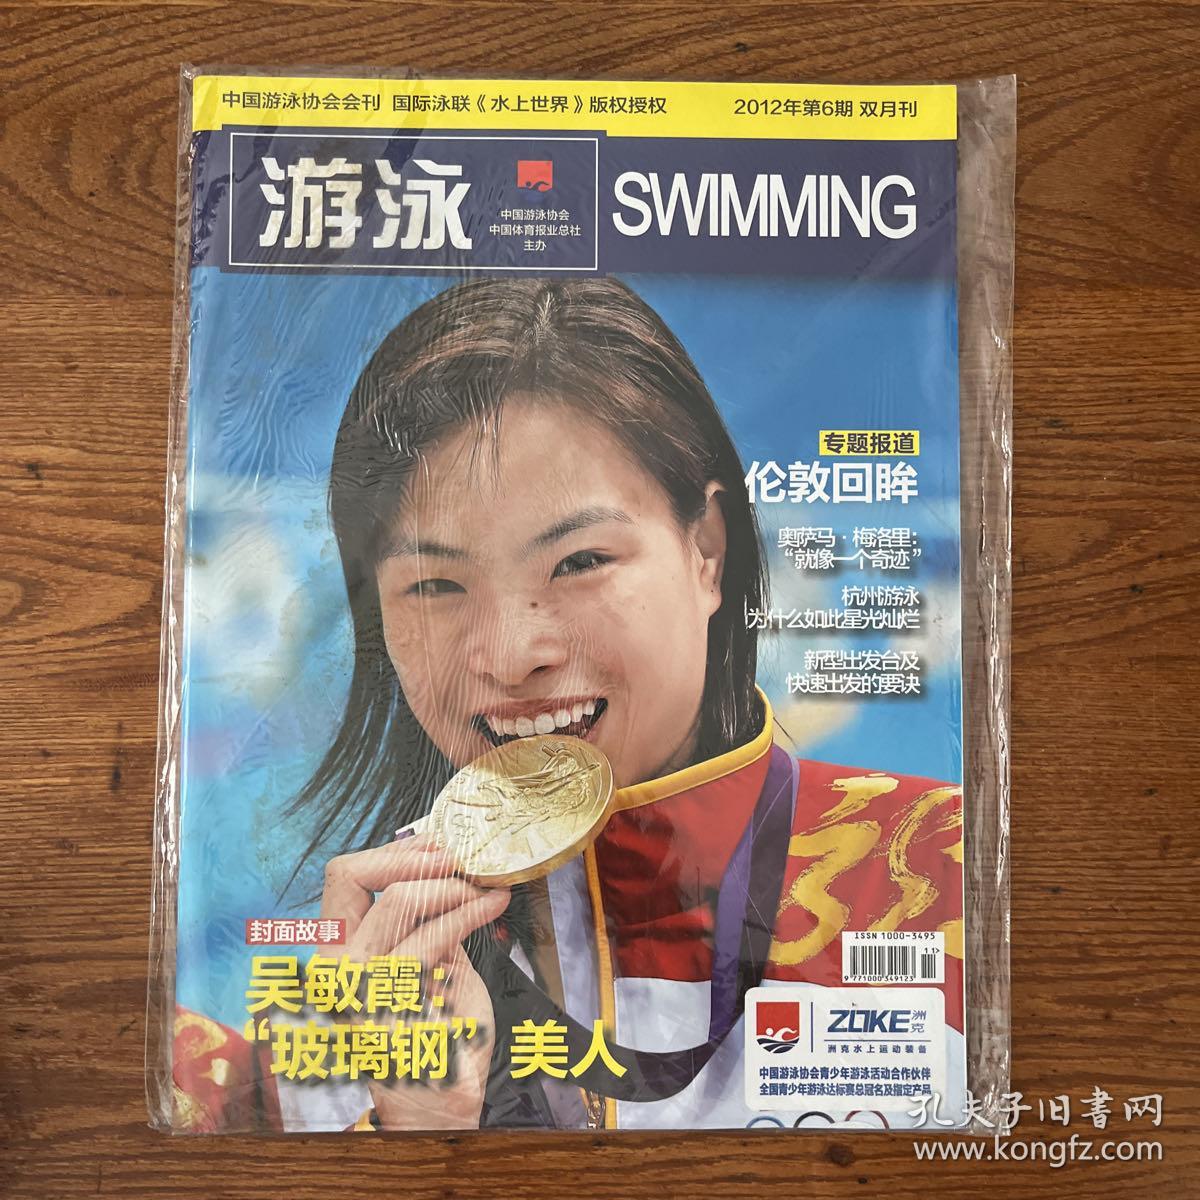 【ZXCS】·中国游泳协会会刊·《游泳》·《冬泳专刊》·两册·2012年06·16开